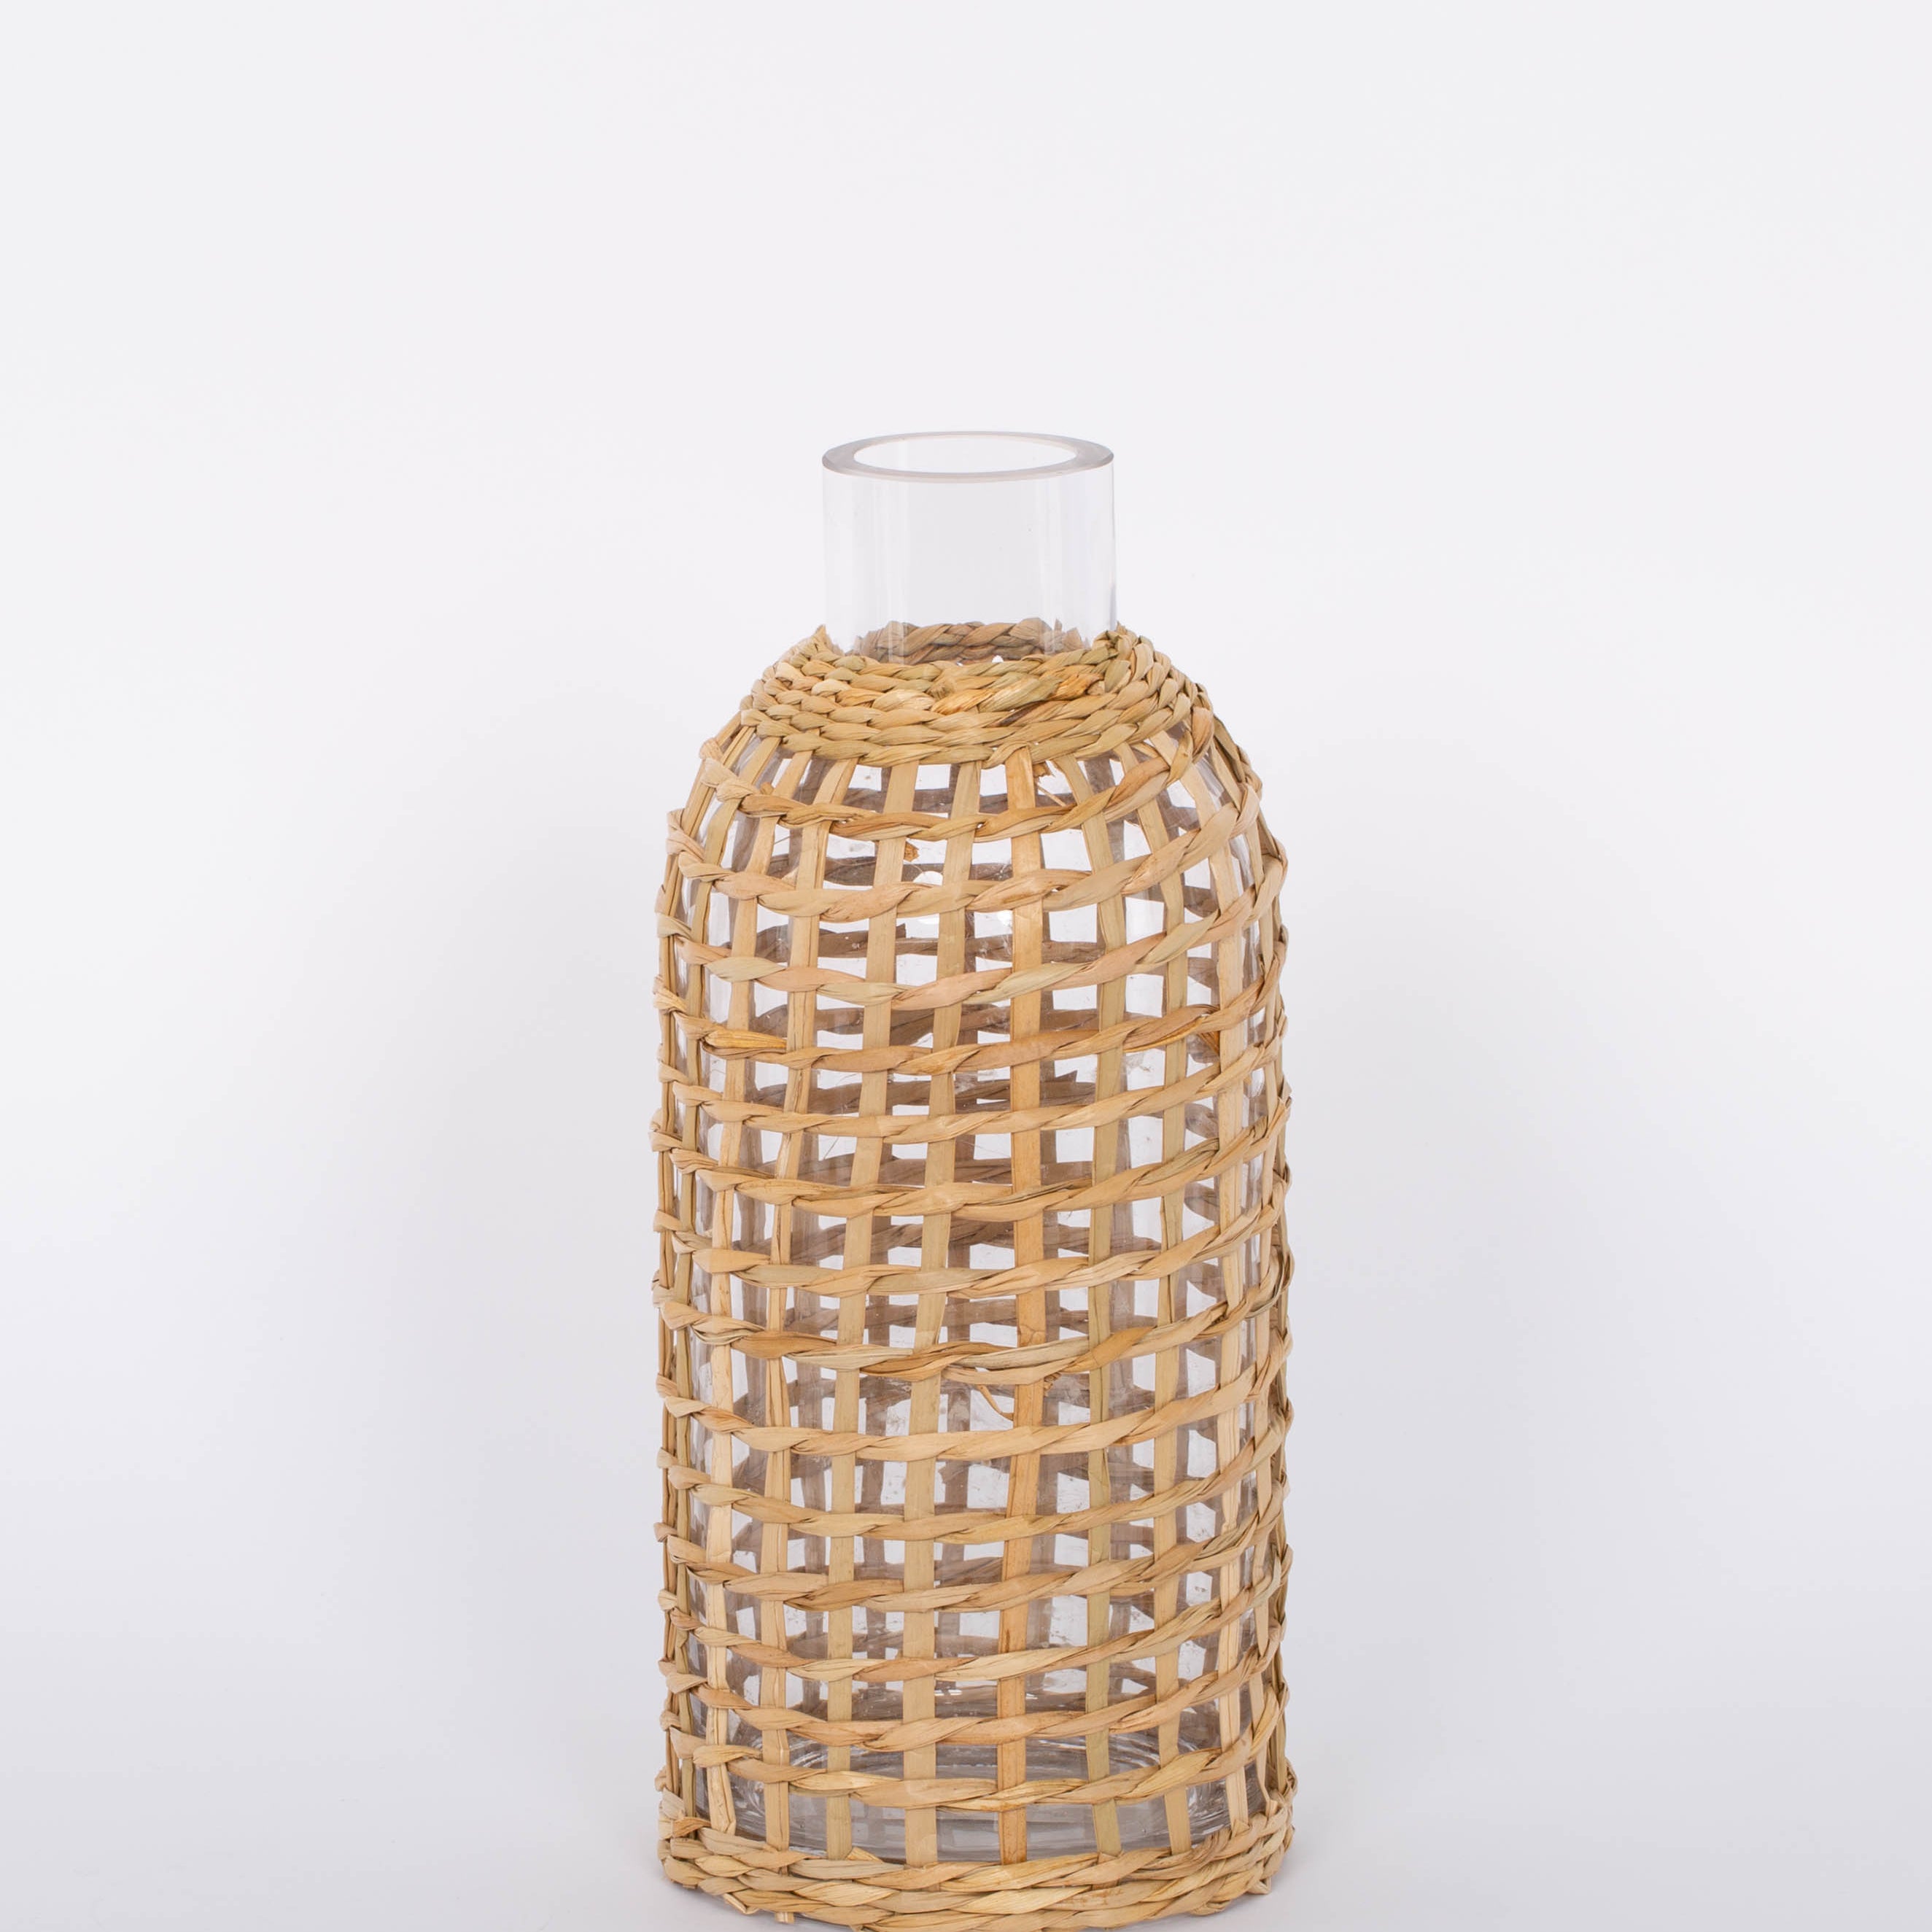 Jaxon Caraffe rattan covered glass vase in neutral light basket tone.  White background.